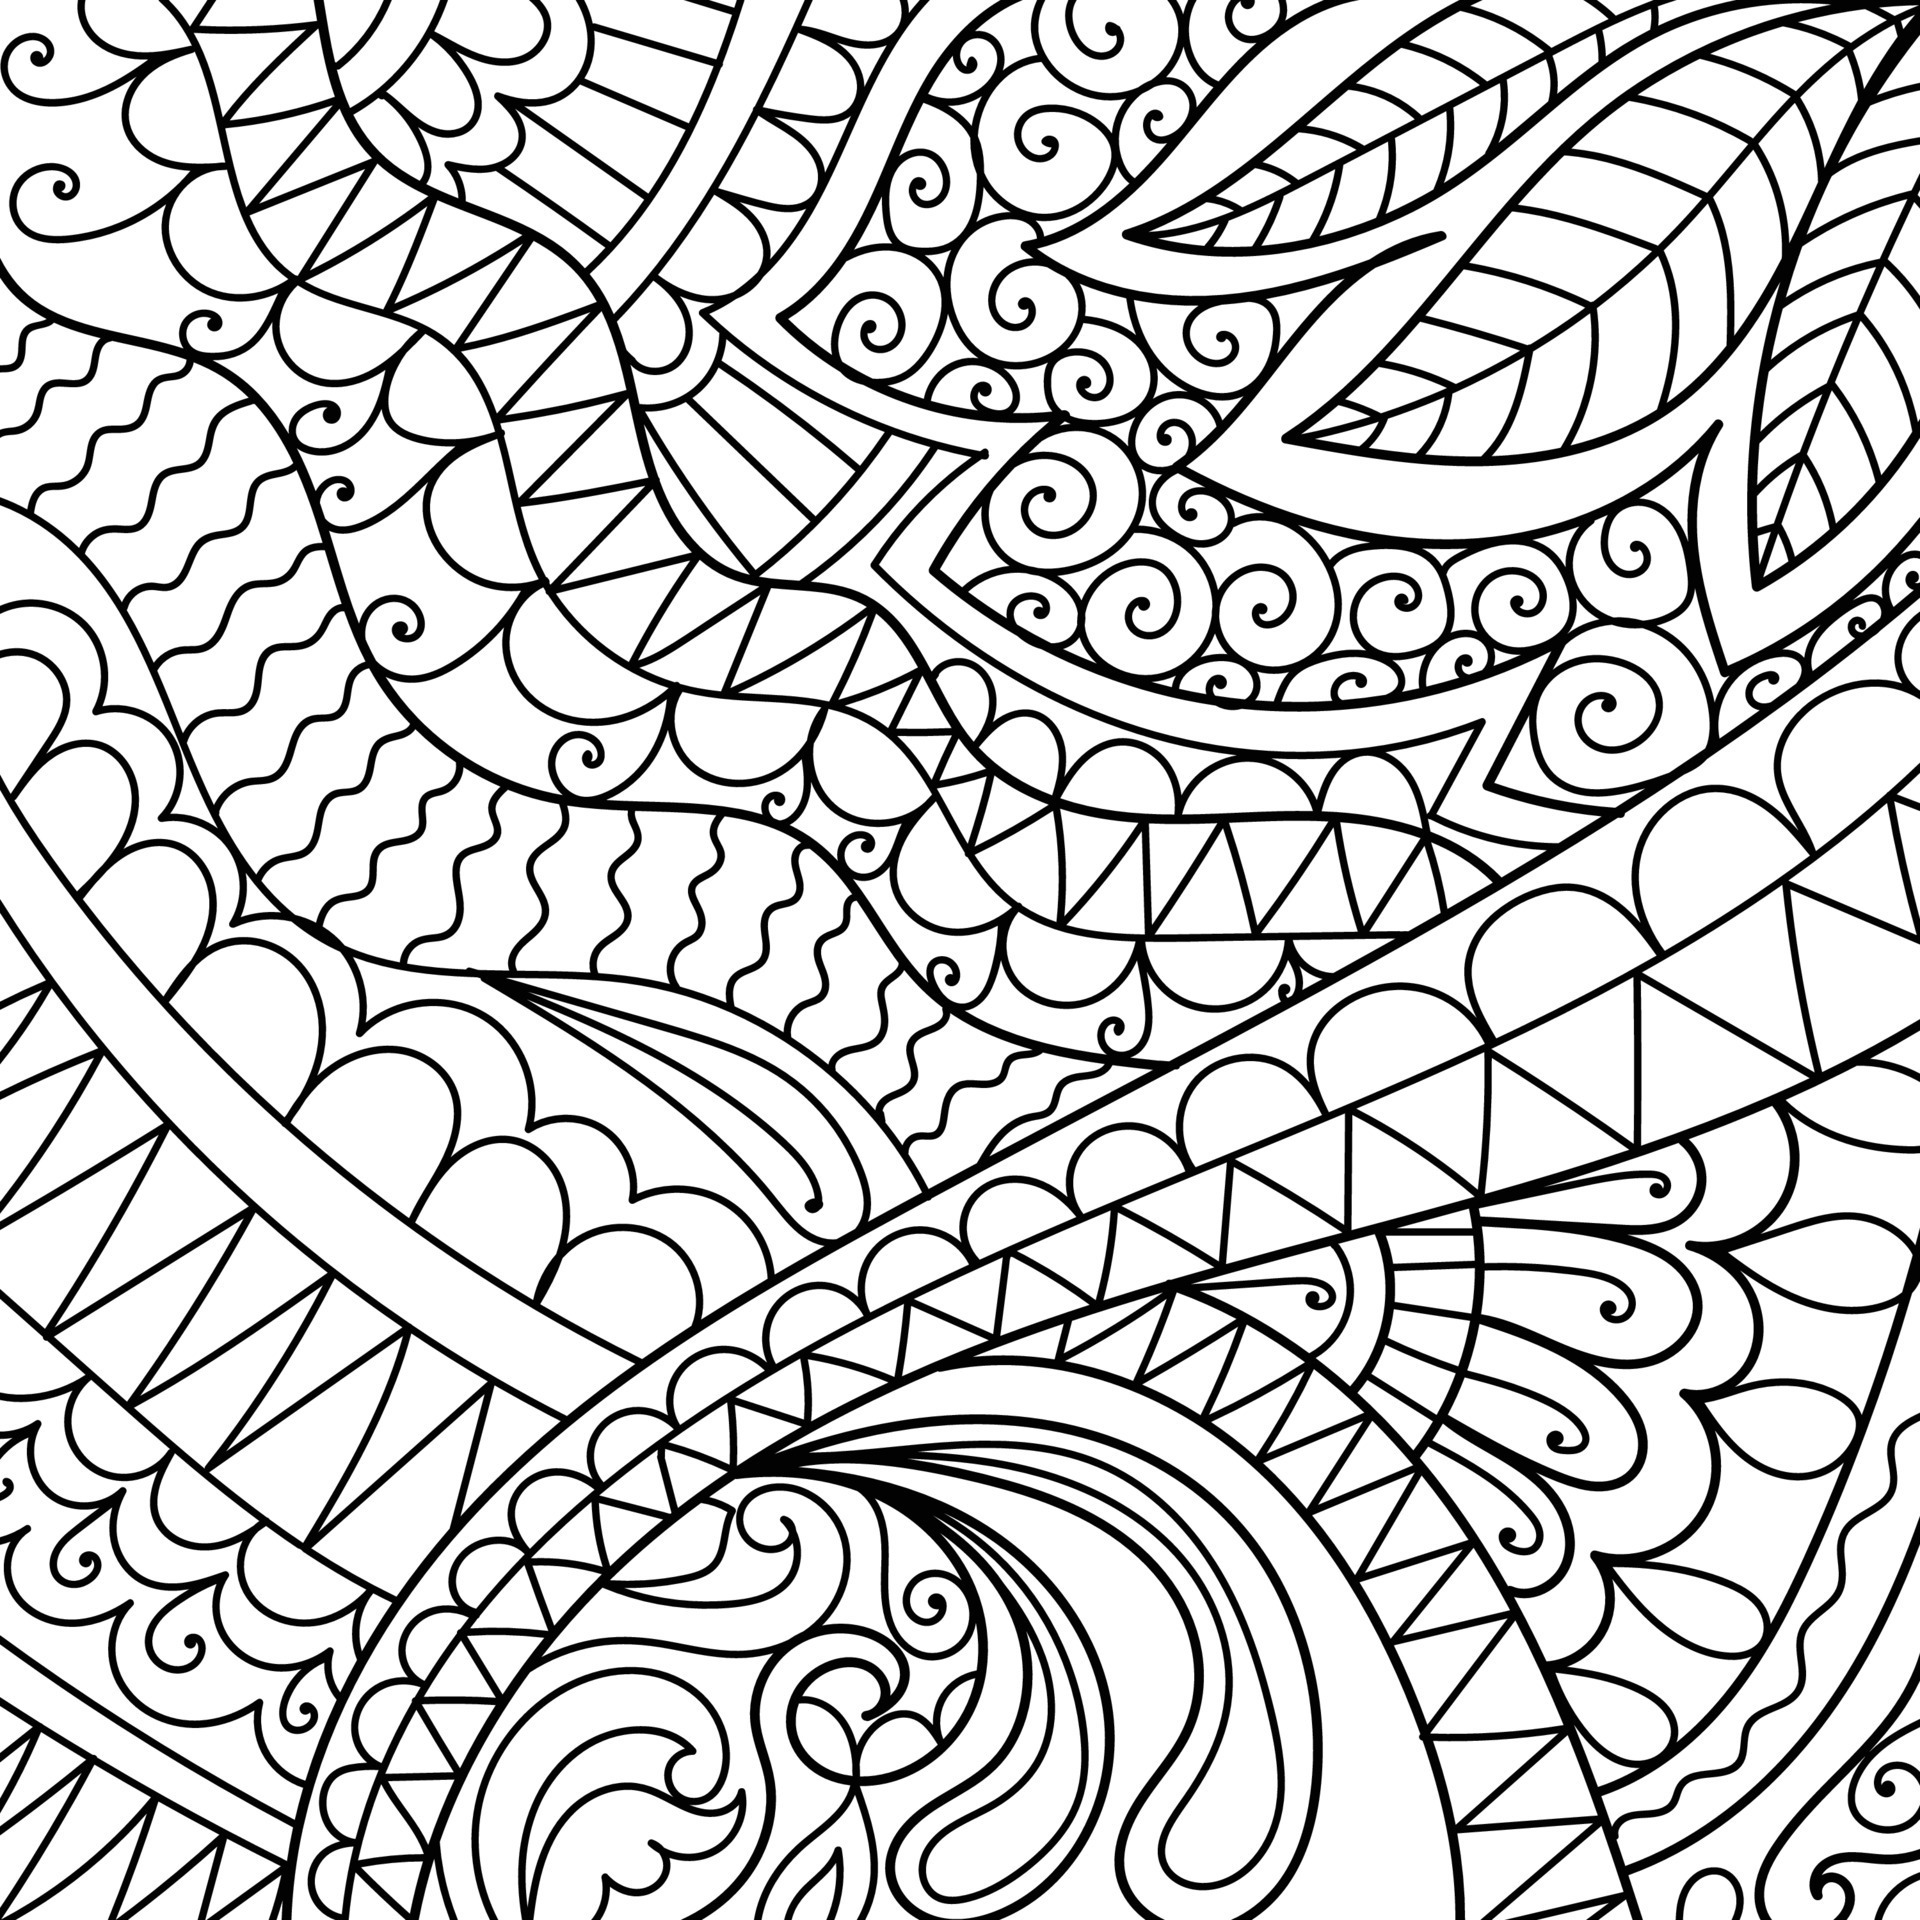 Decorative henna design coloring book page illustration 10739370 Vector ...